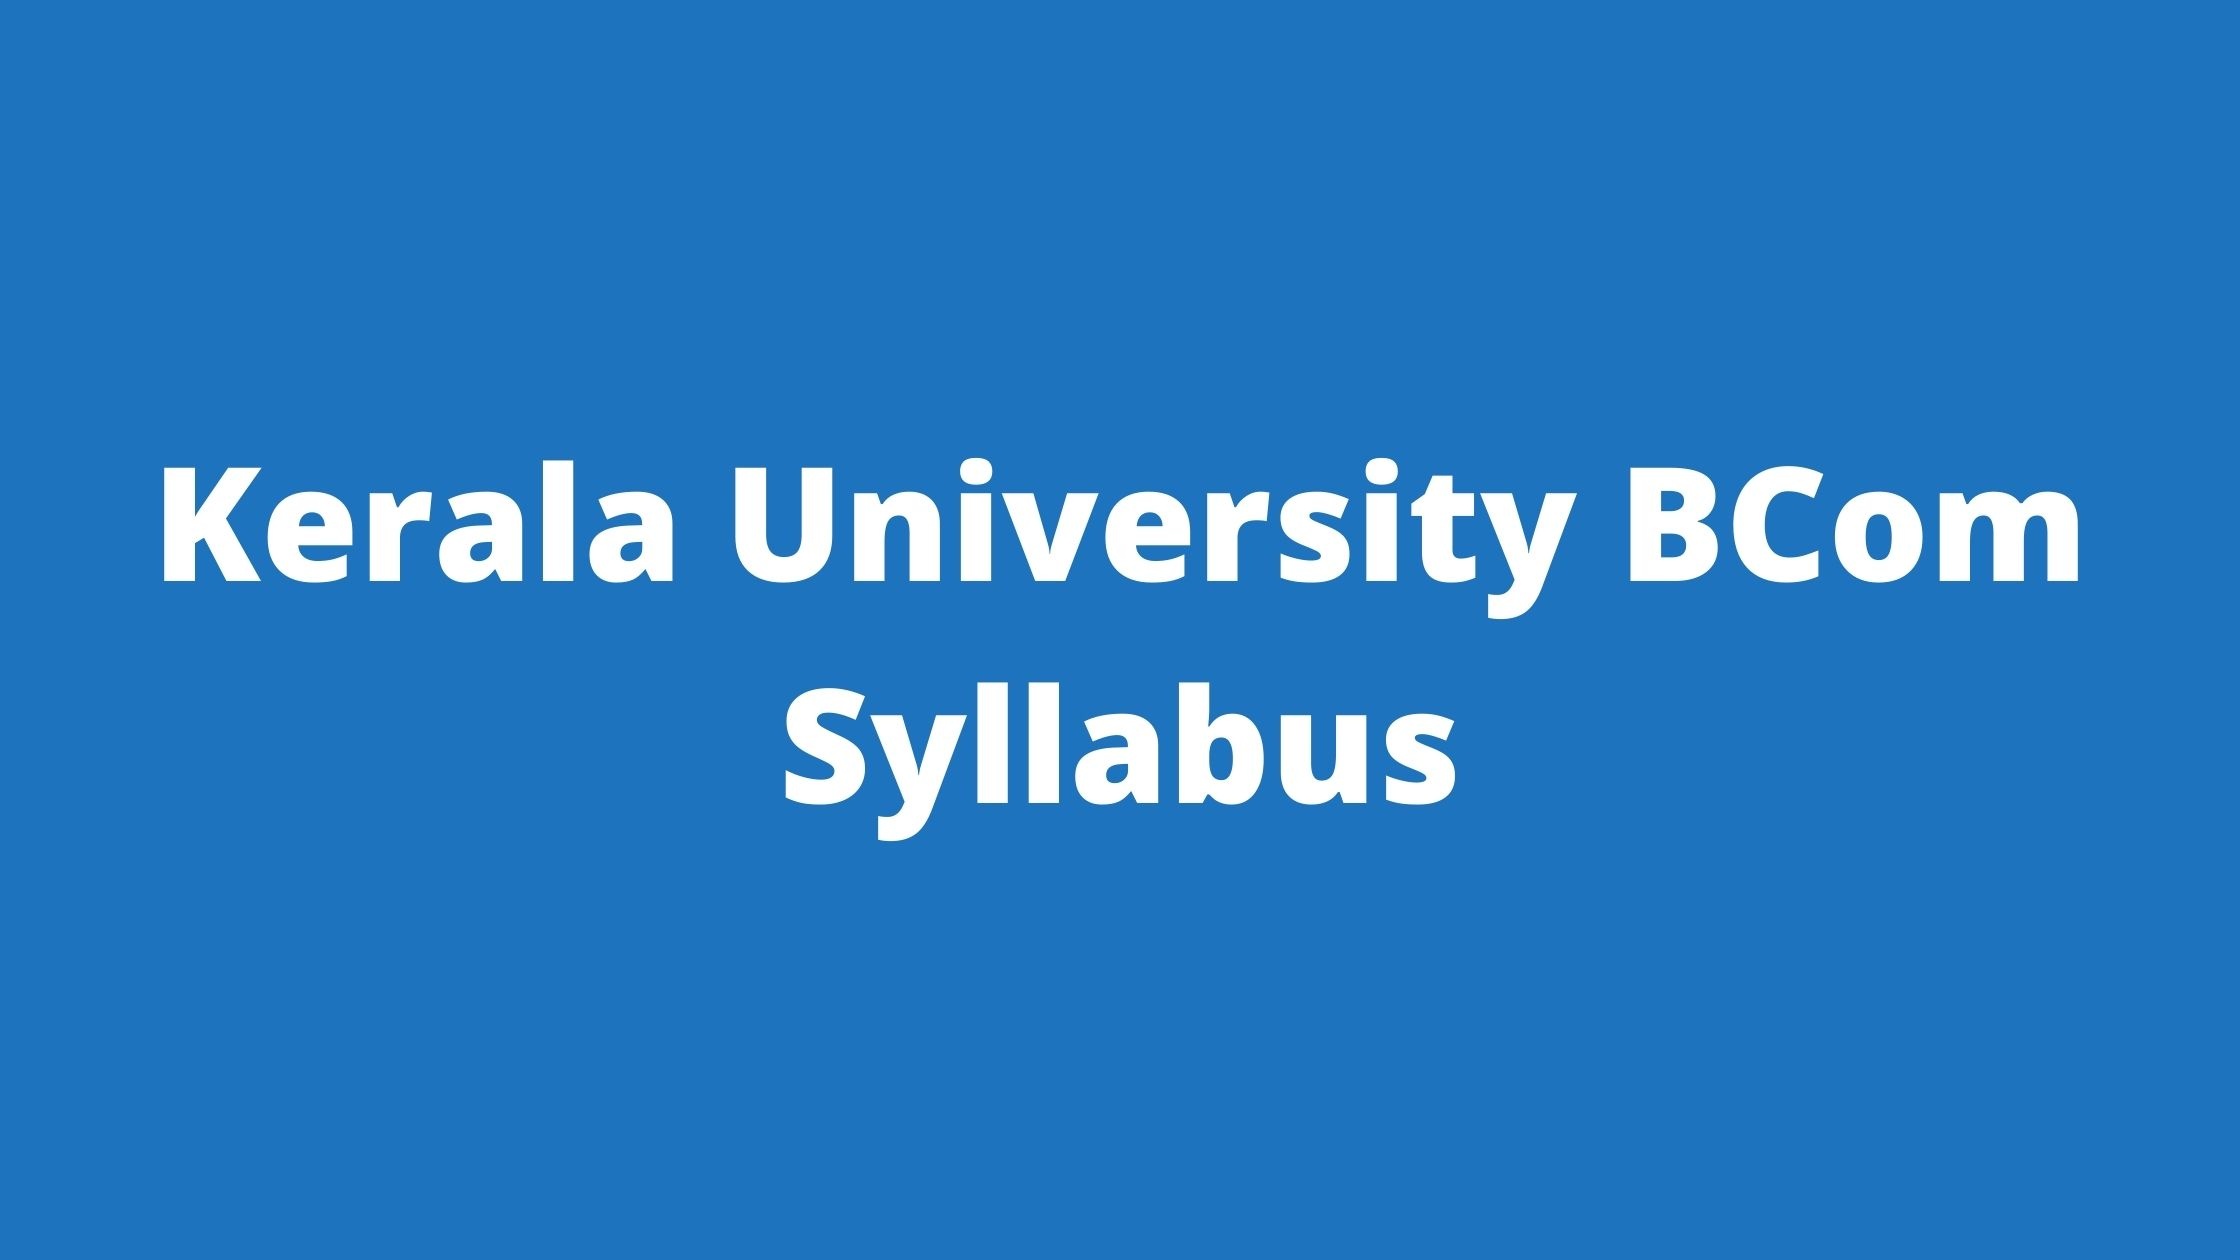 b.com travel and tourism syllabus kerala university